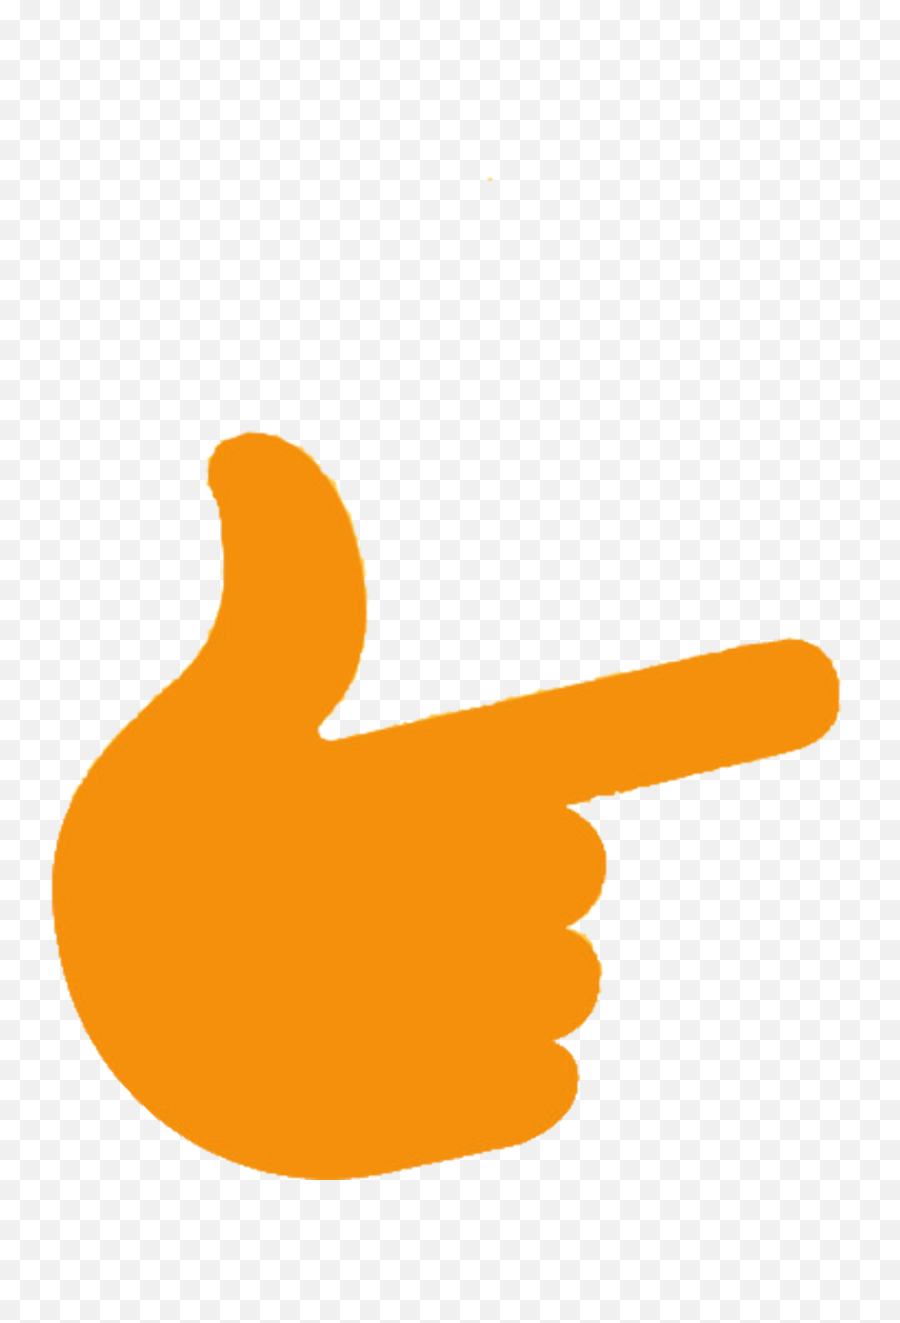 Thinkhand - Discord Emoji 780709 Png Images Pngio Thinking Emoji Discord Hand,Hand Emoji